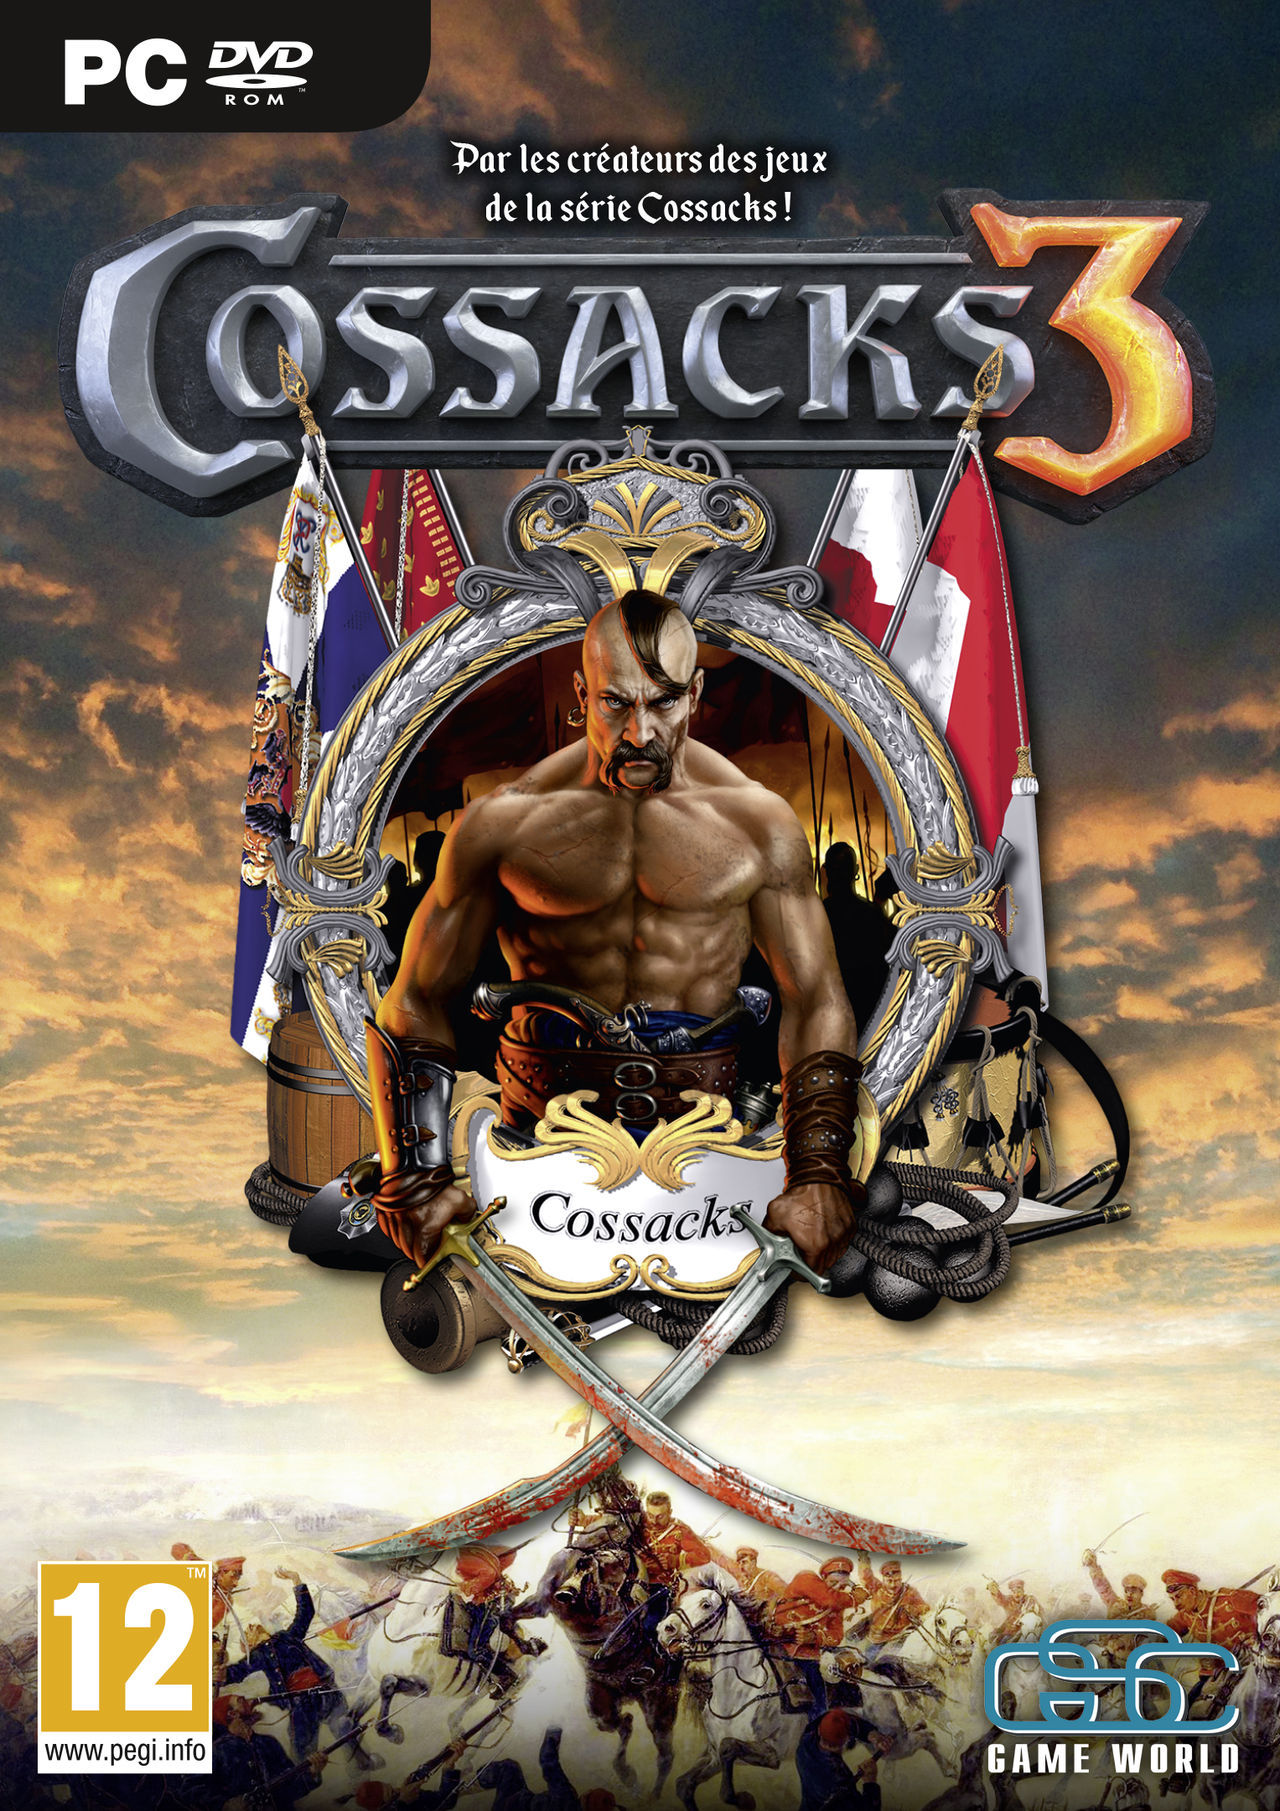 cossack game download